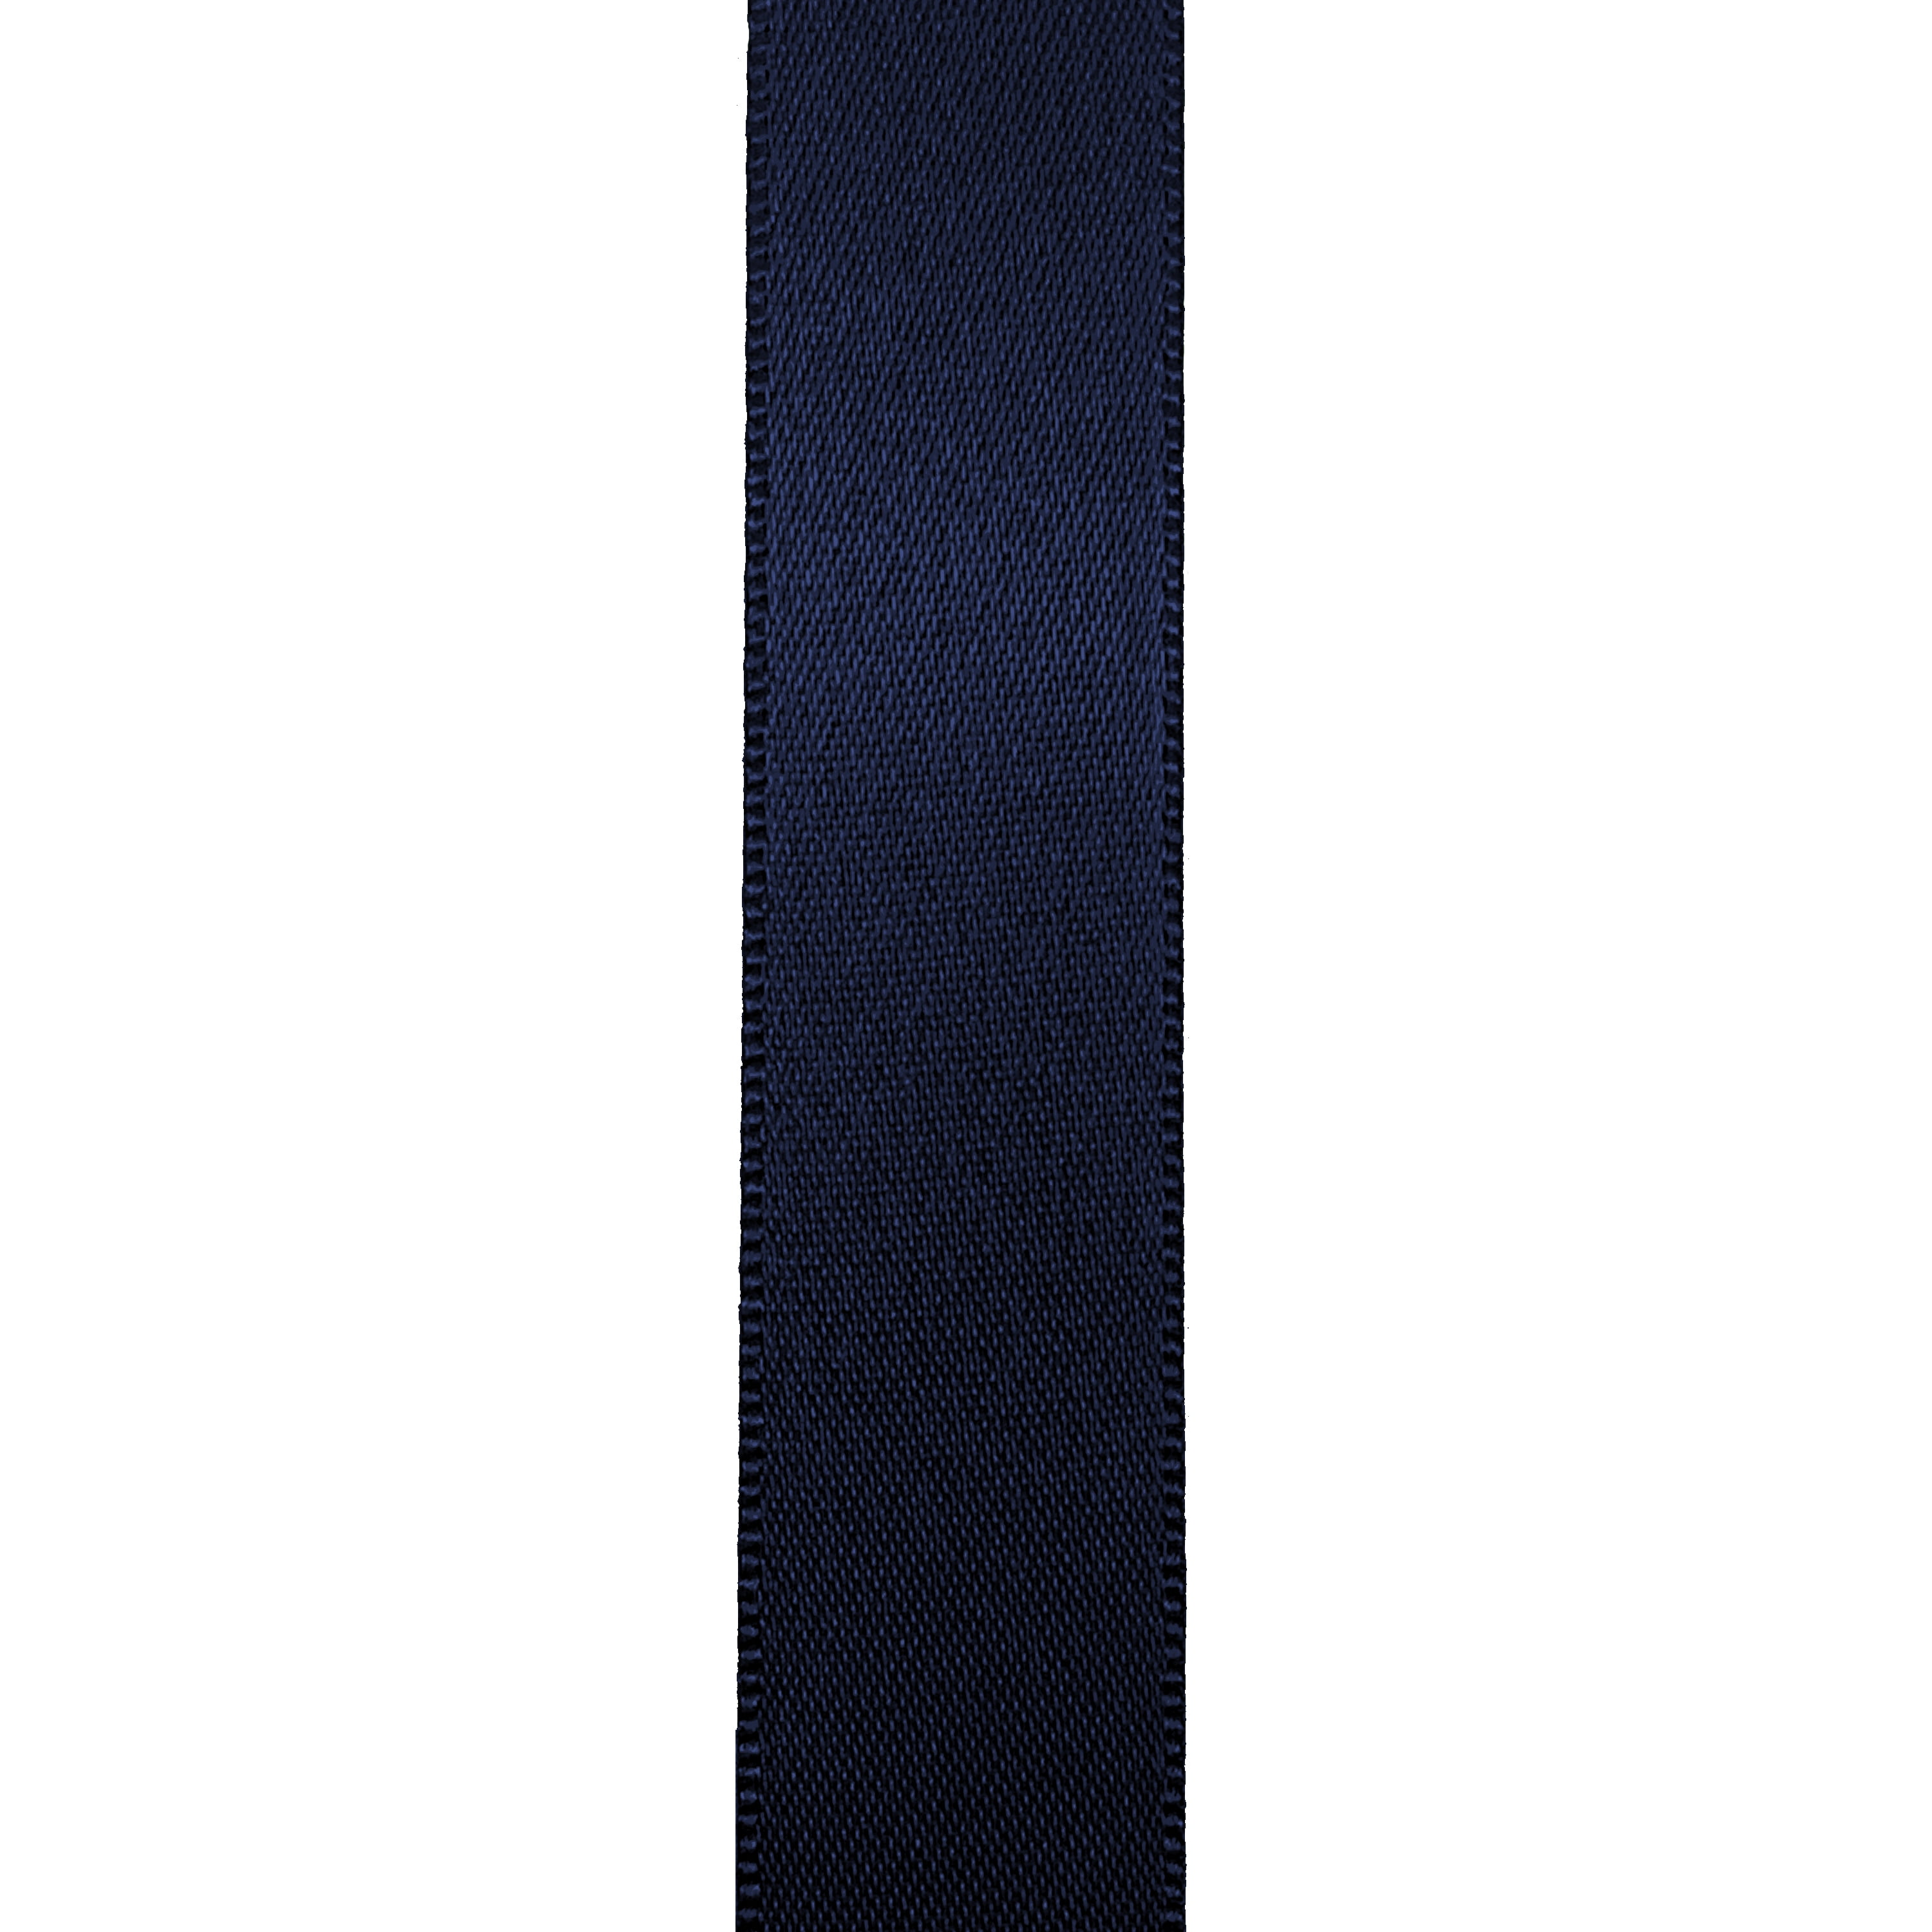 Narrow Navy Blue Satin Acetate Ribbon is the perfect shade of navy